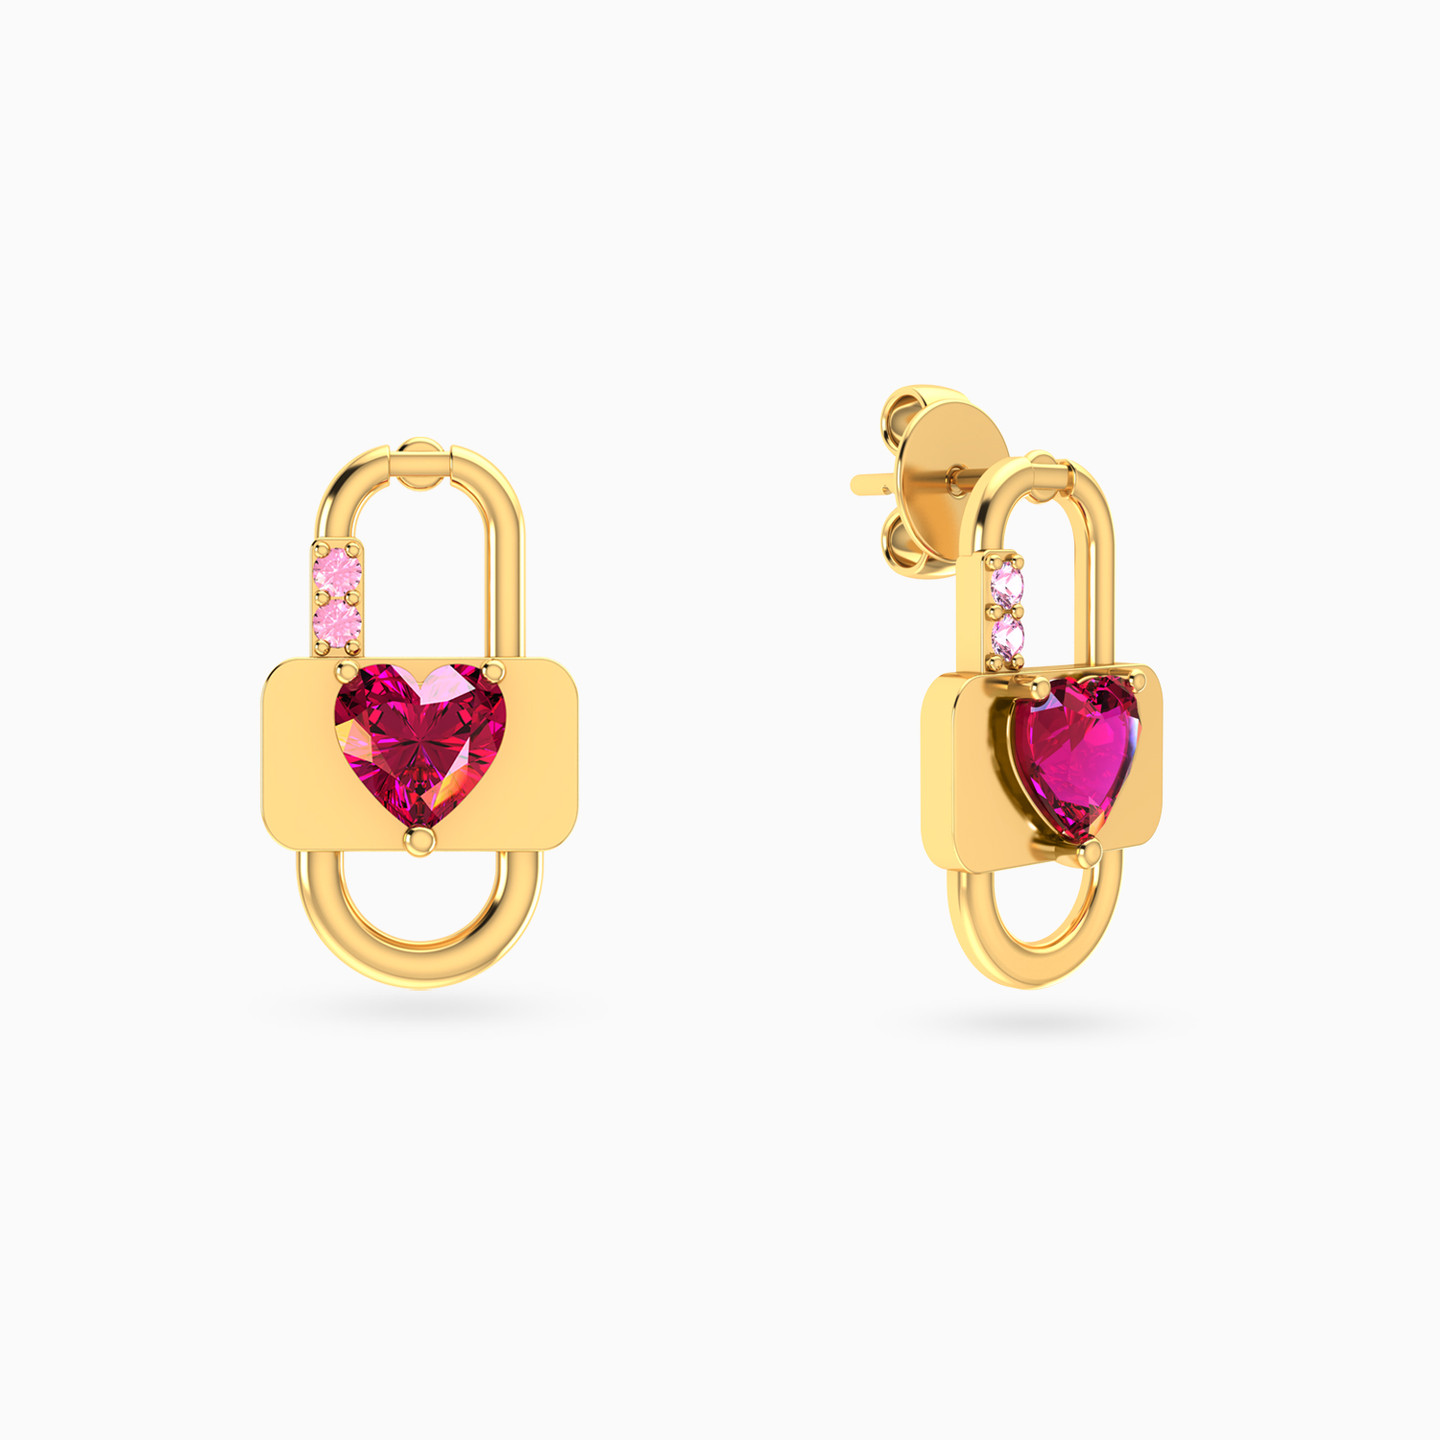 18K Gold Colored Stones Stud Earrings - 2